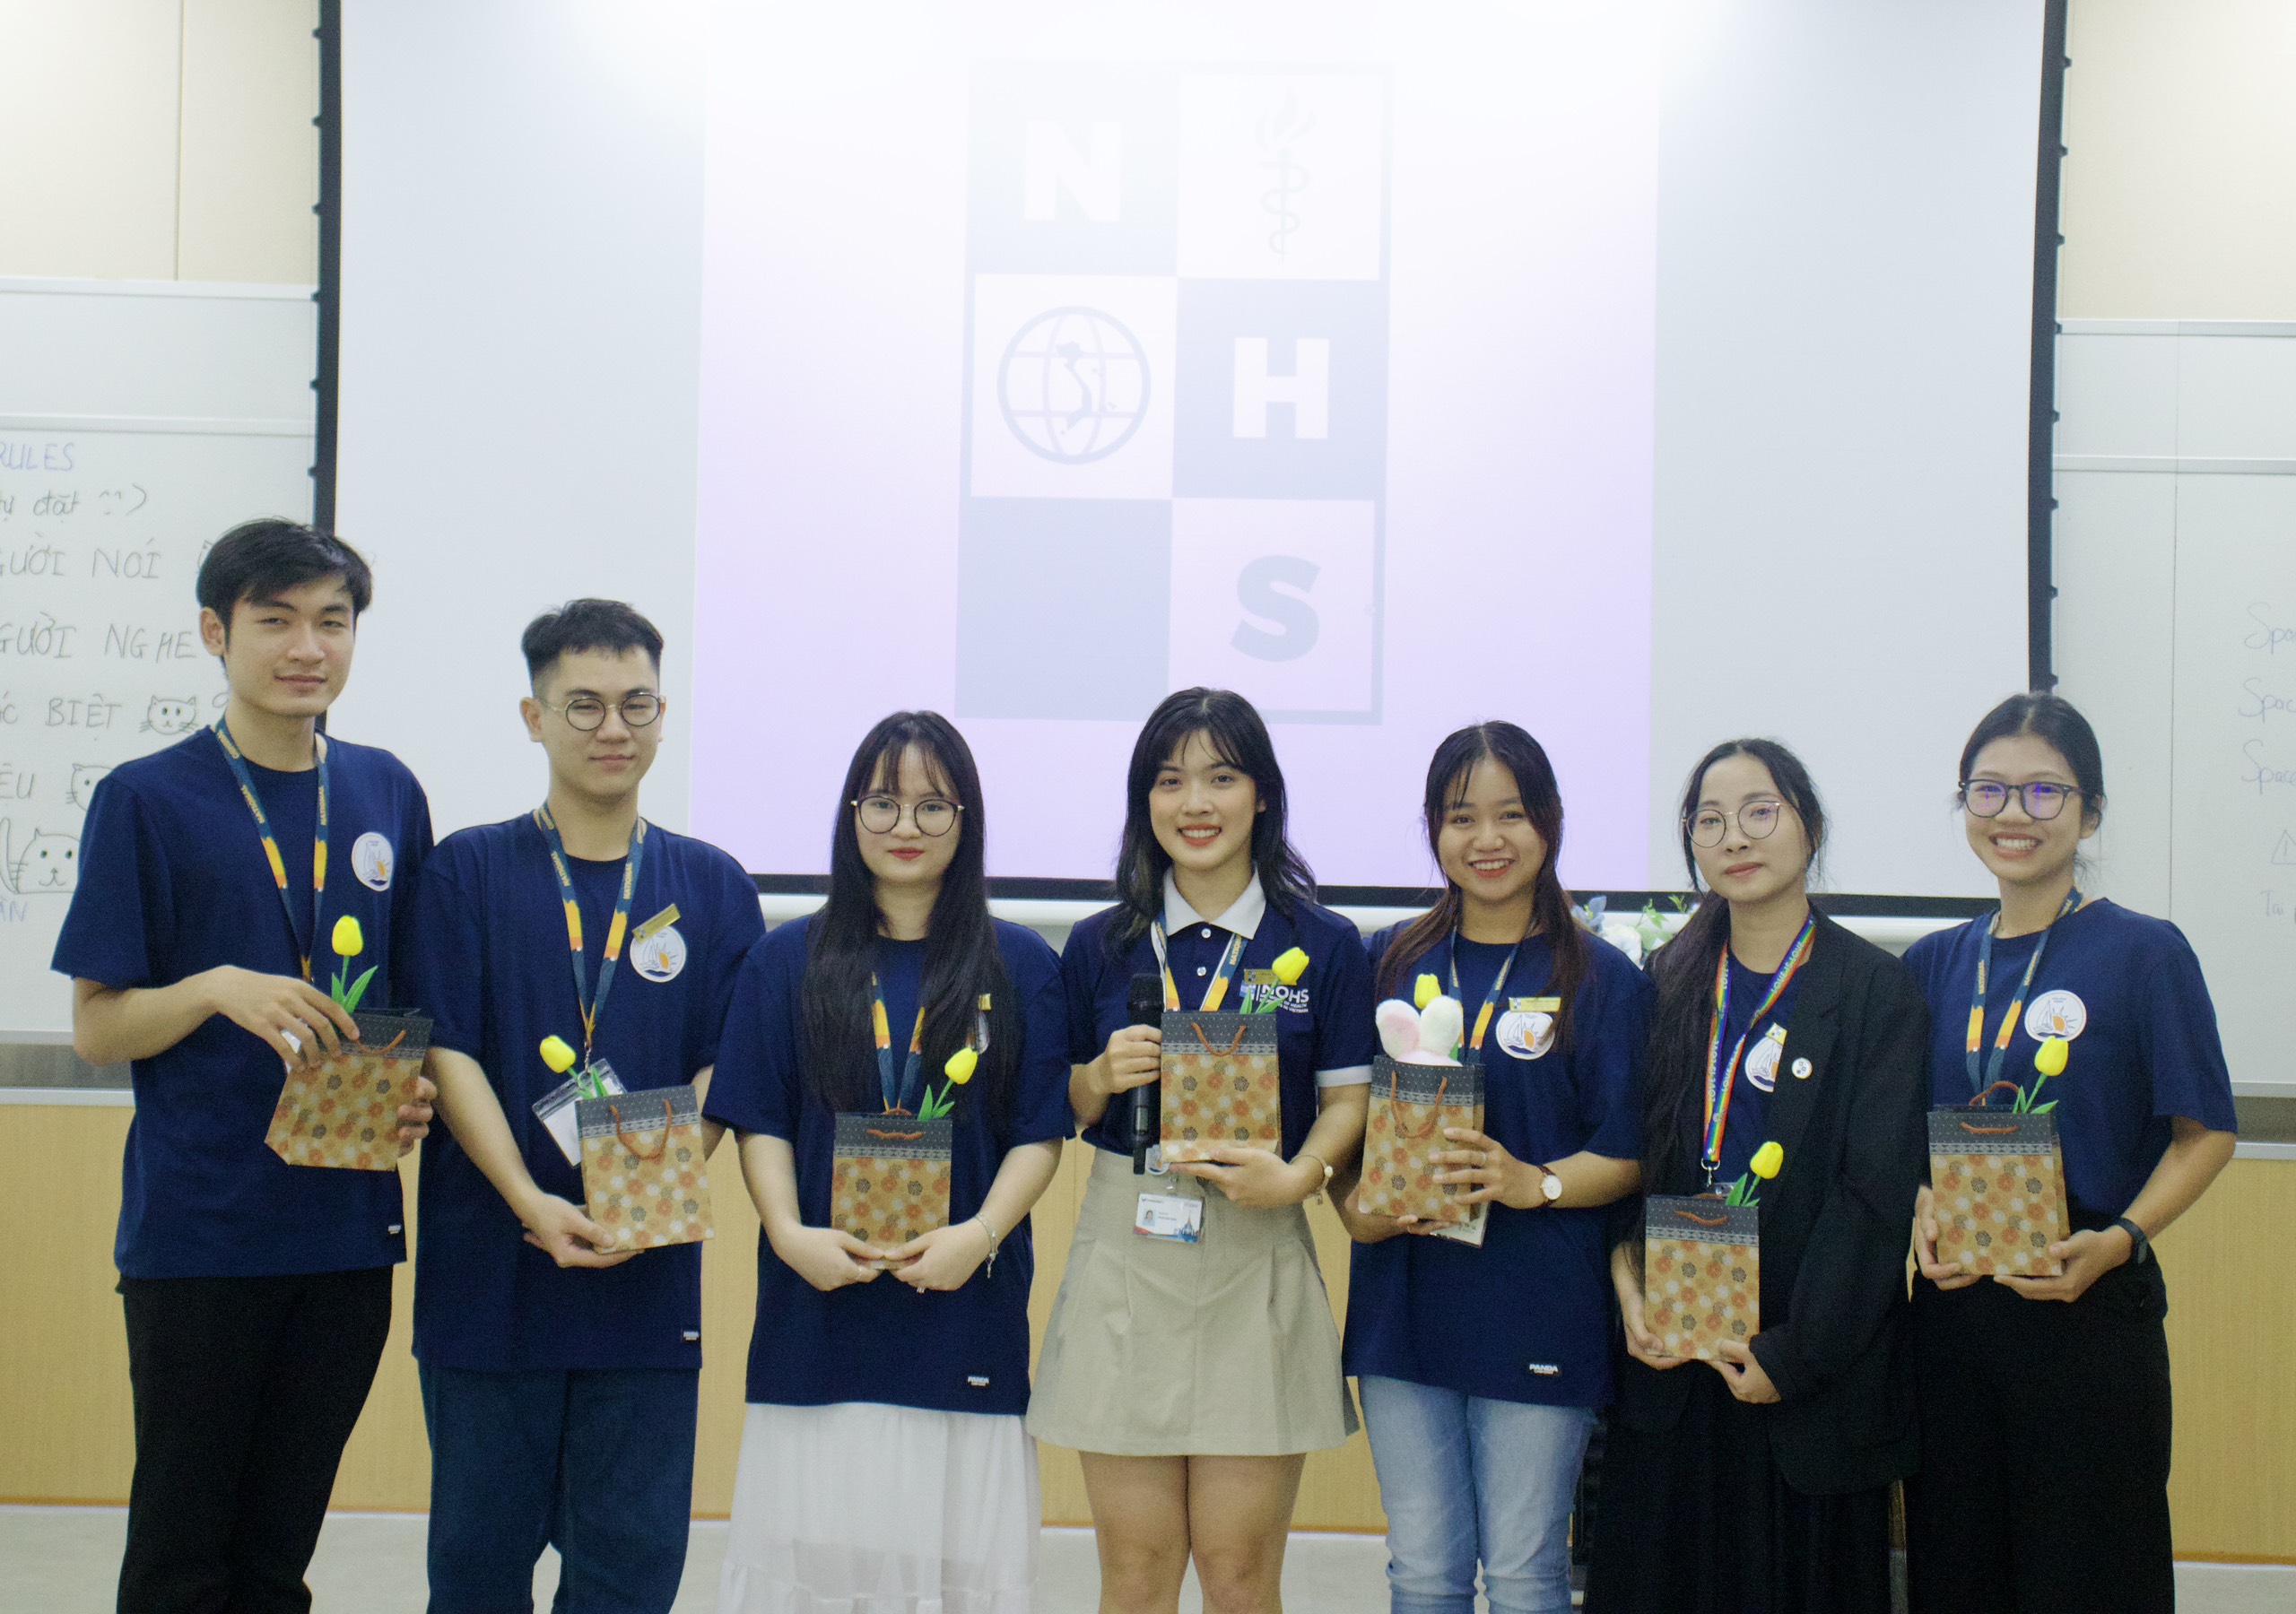 VinUni student became President of Network of Health Students Vietnam (NOHS)